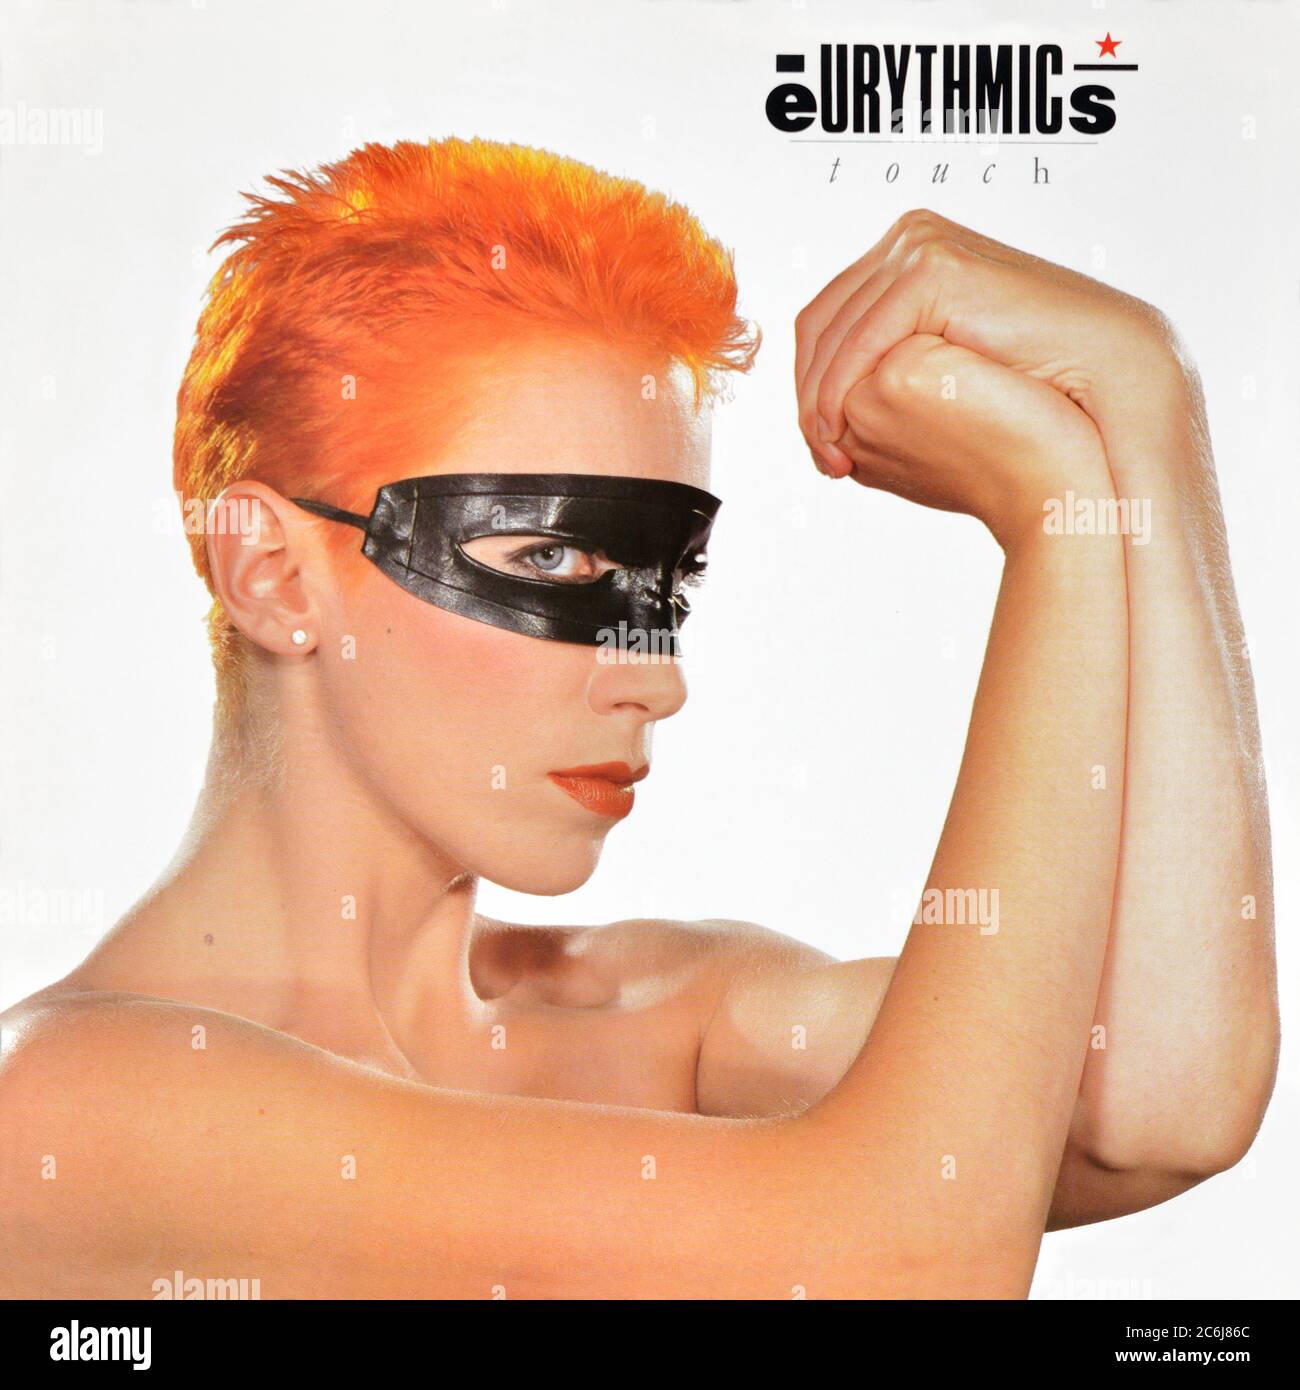 Eurythmics - original vinyl album cover - Touch - 1983 Stock Photo